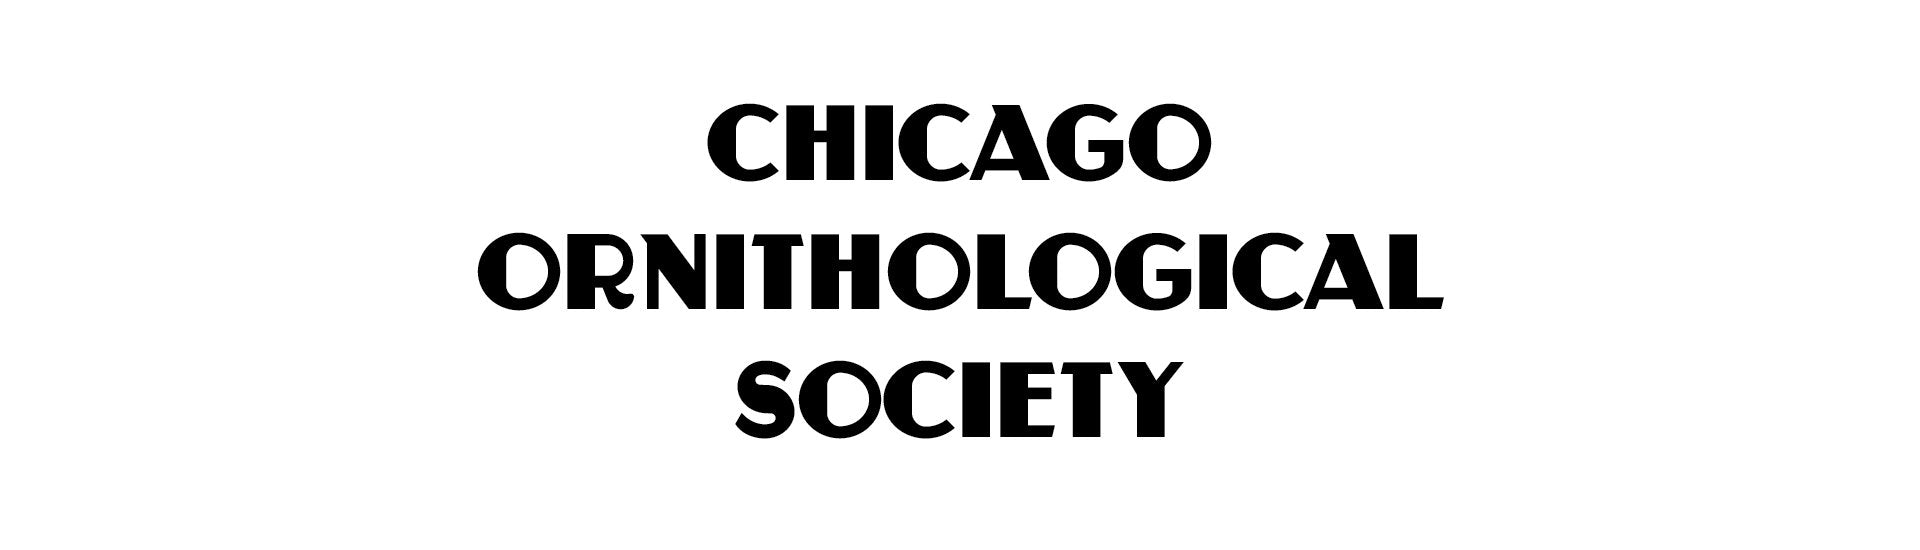 Chicago Ornithological Society - The T-Shirt Deli, Co.